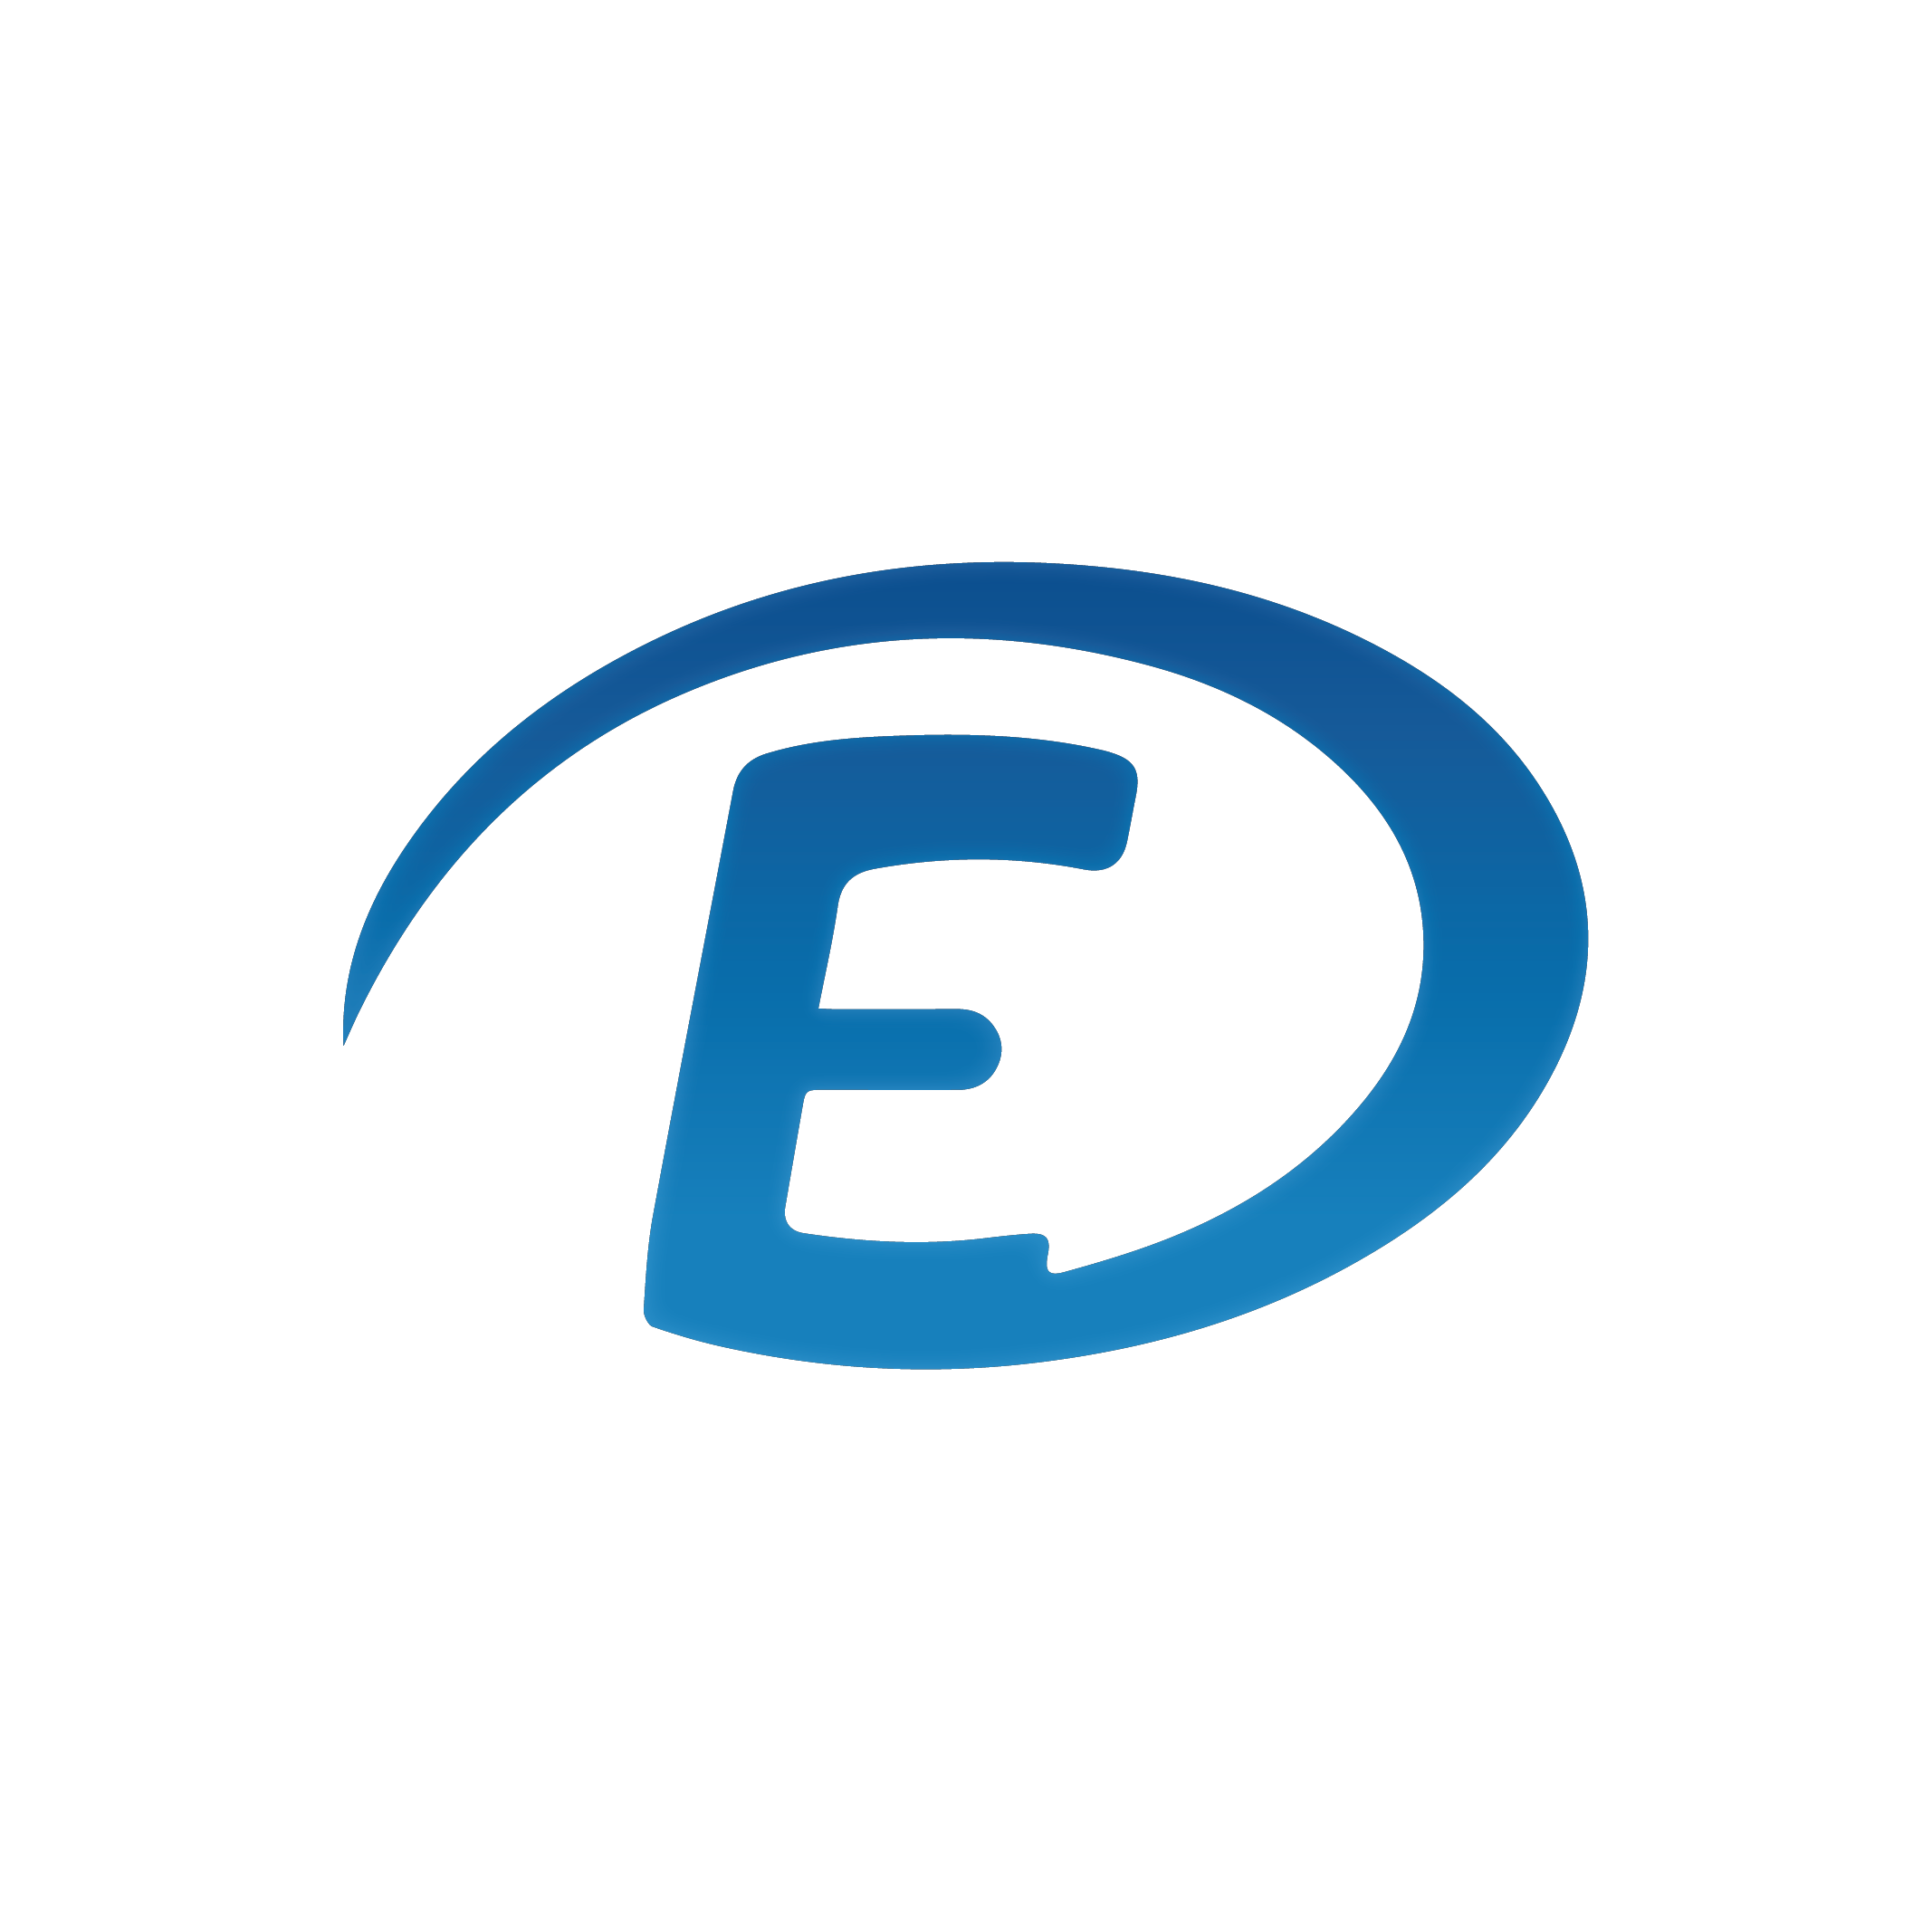 Logo Ecole Directe